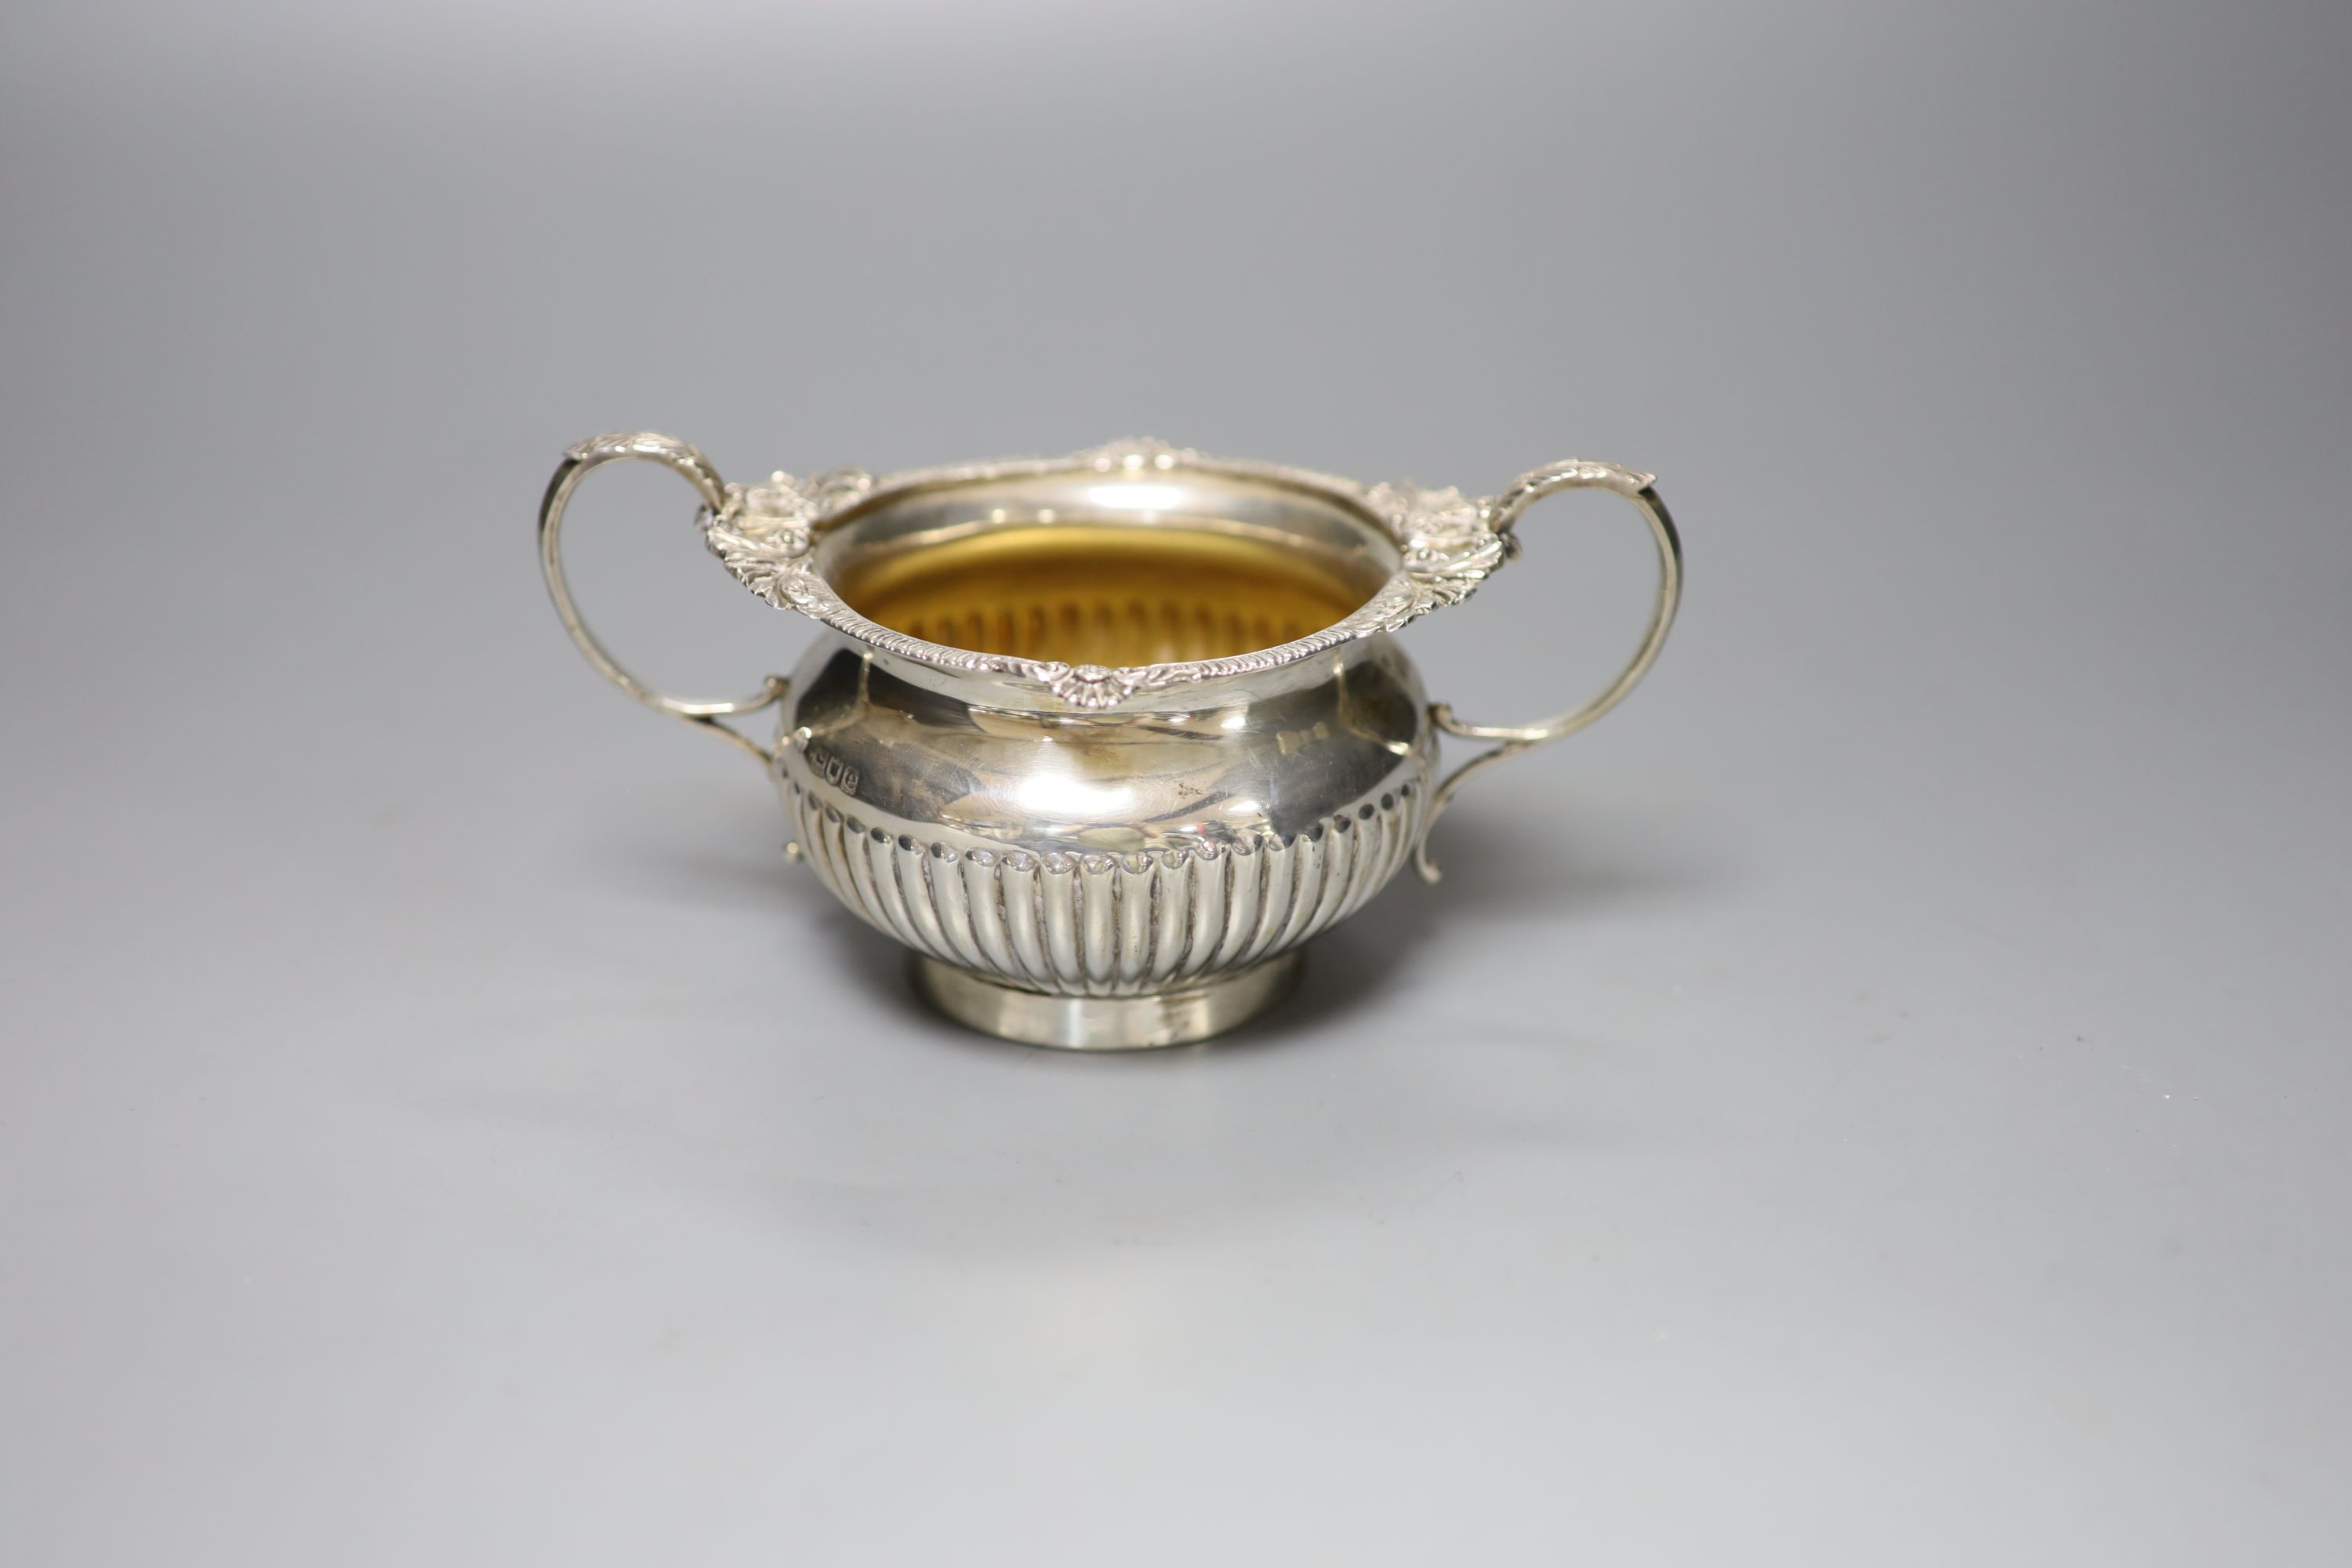 A late Victorian silver sugar bowl William Hutton & Sons, London, 1900, 6.5oz.